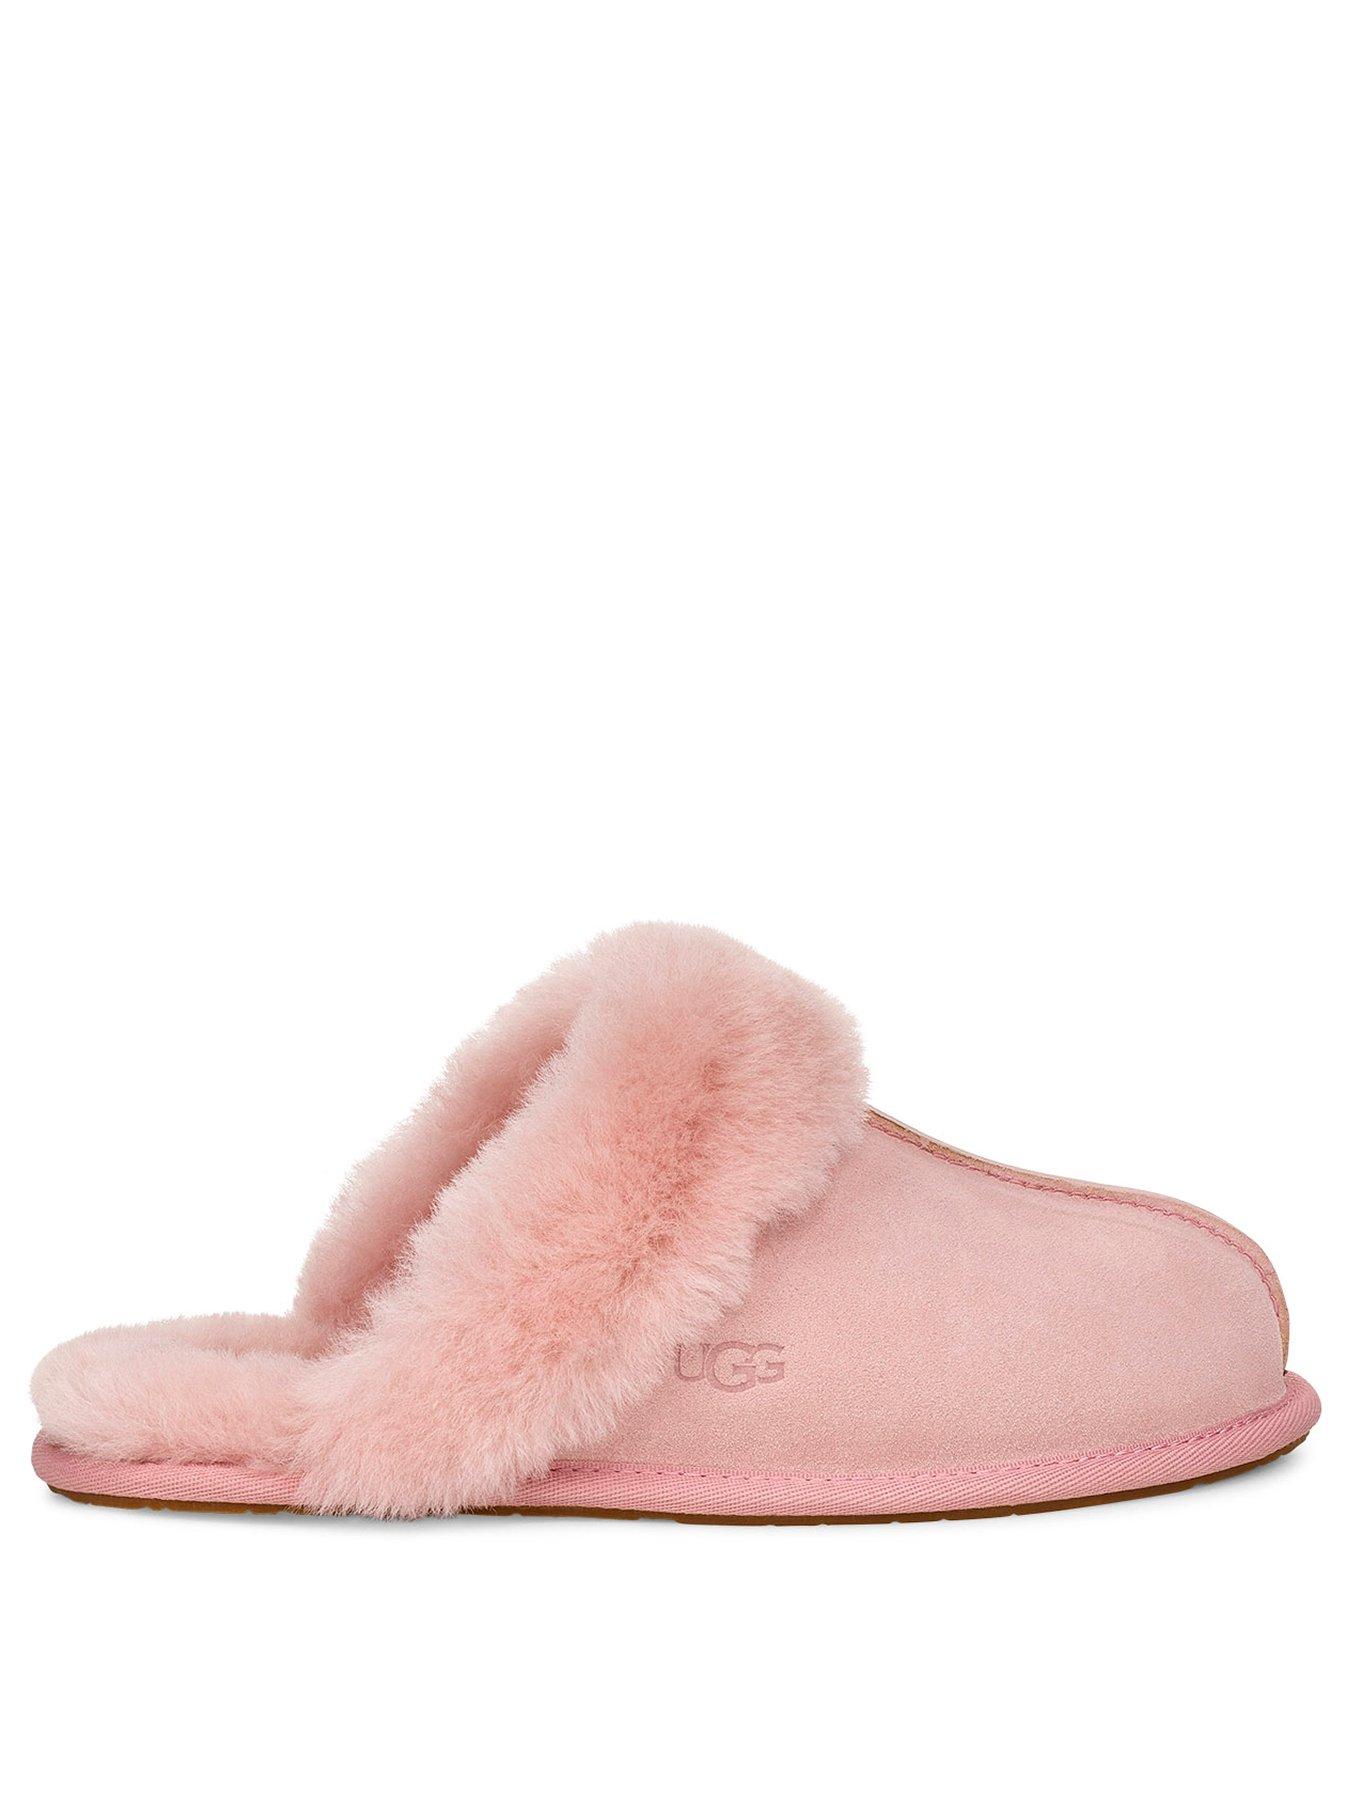 buy ugg slippers uk